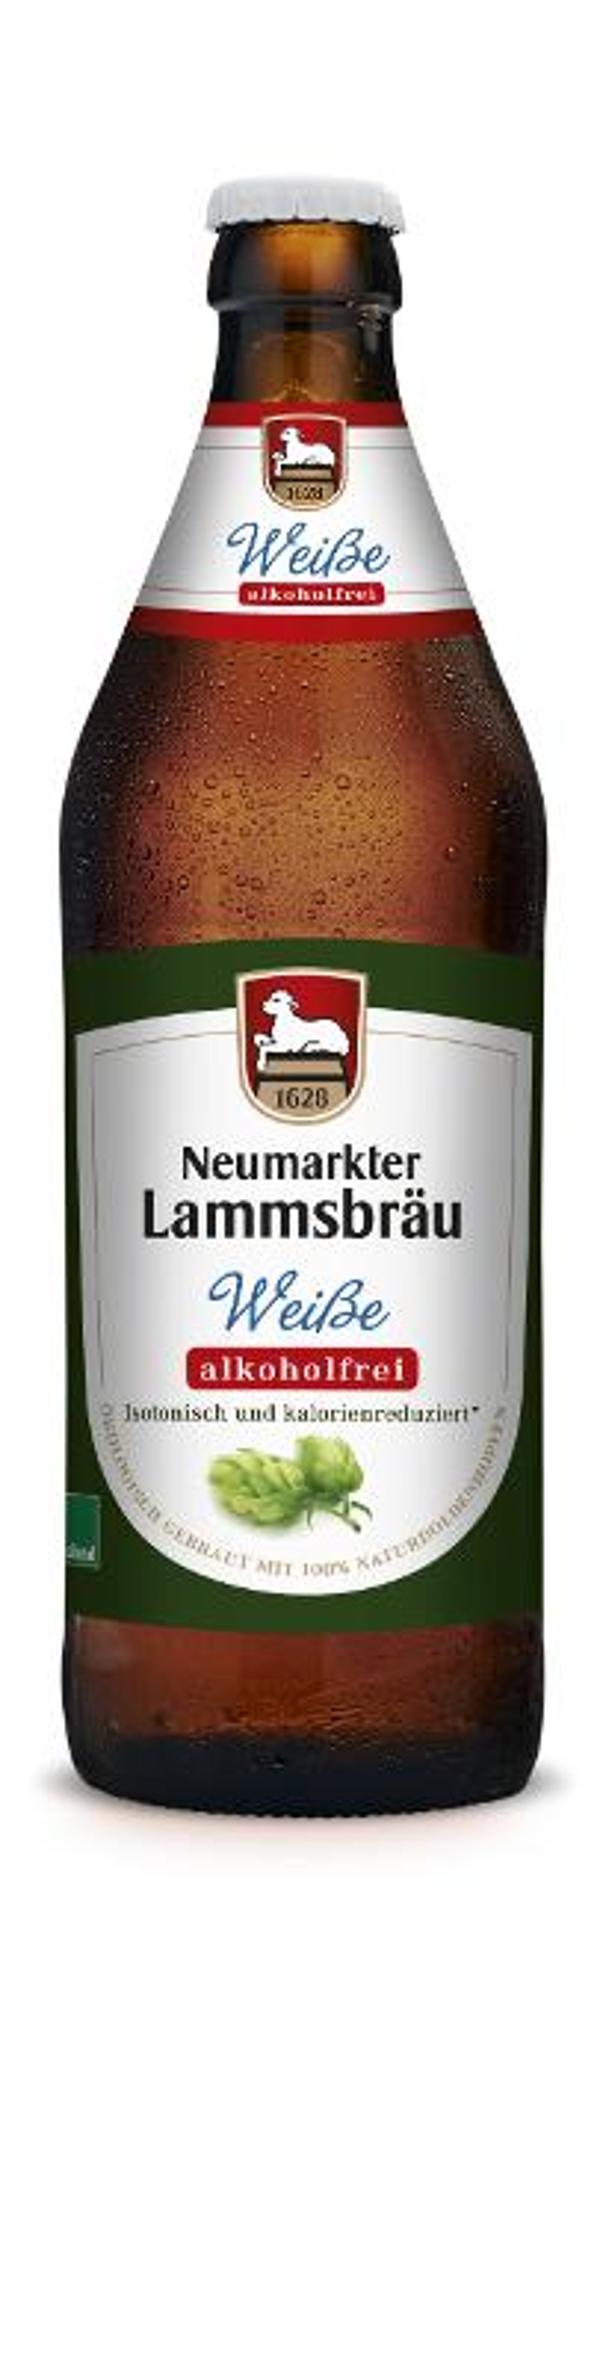 Produktfoto zu Bier Weiße alkoholfrei 0,5 l Neumarkter Lammsbräu